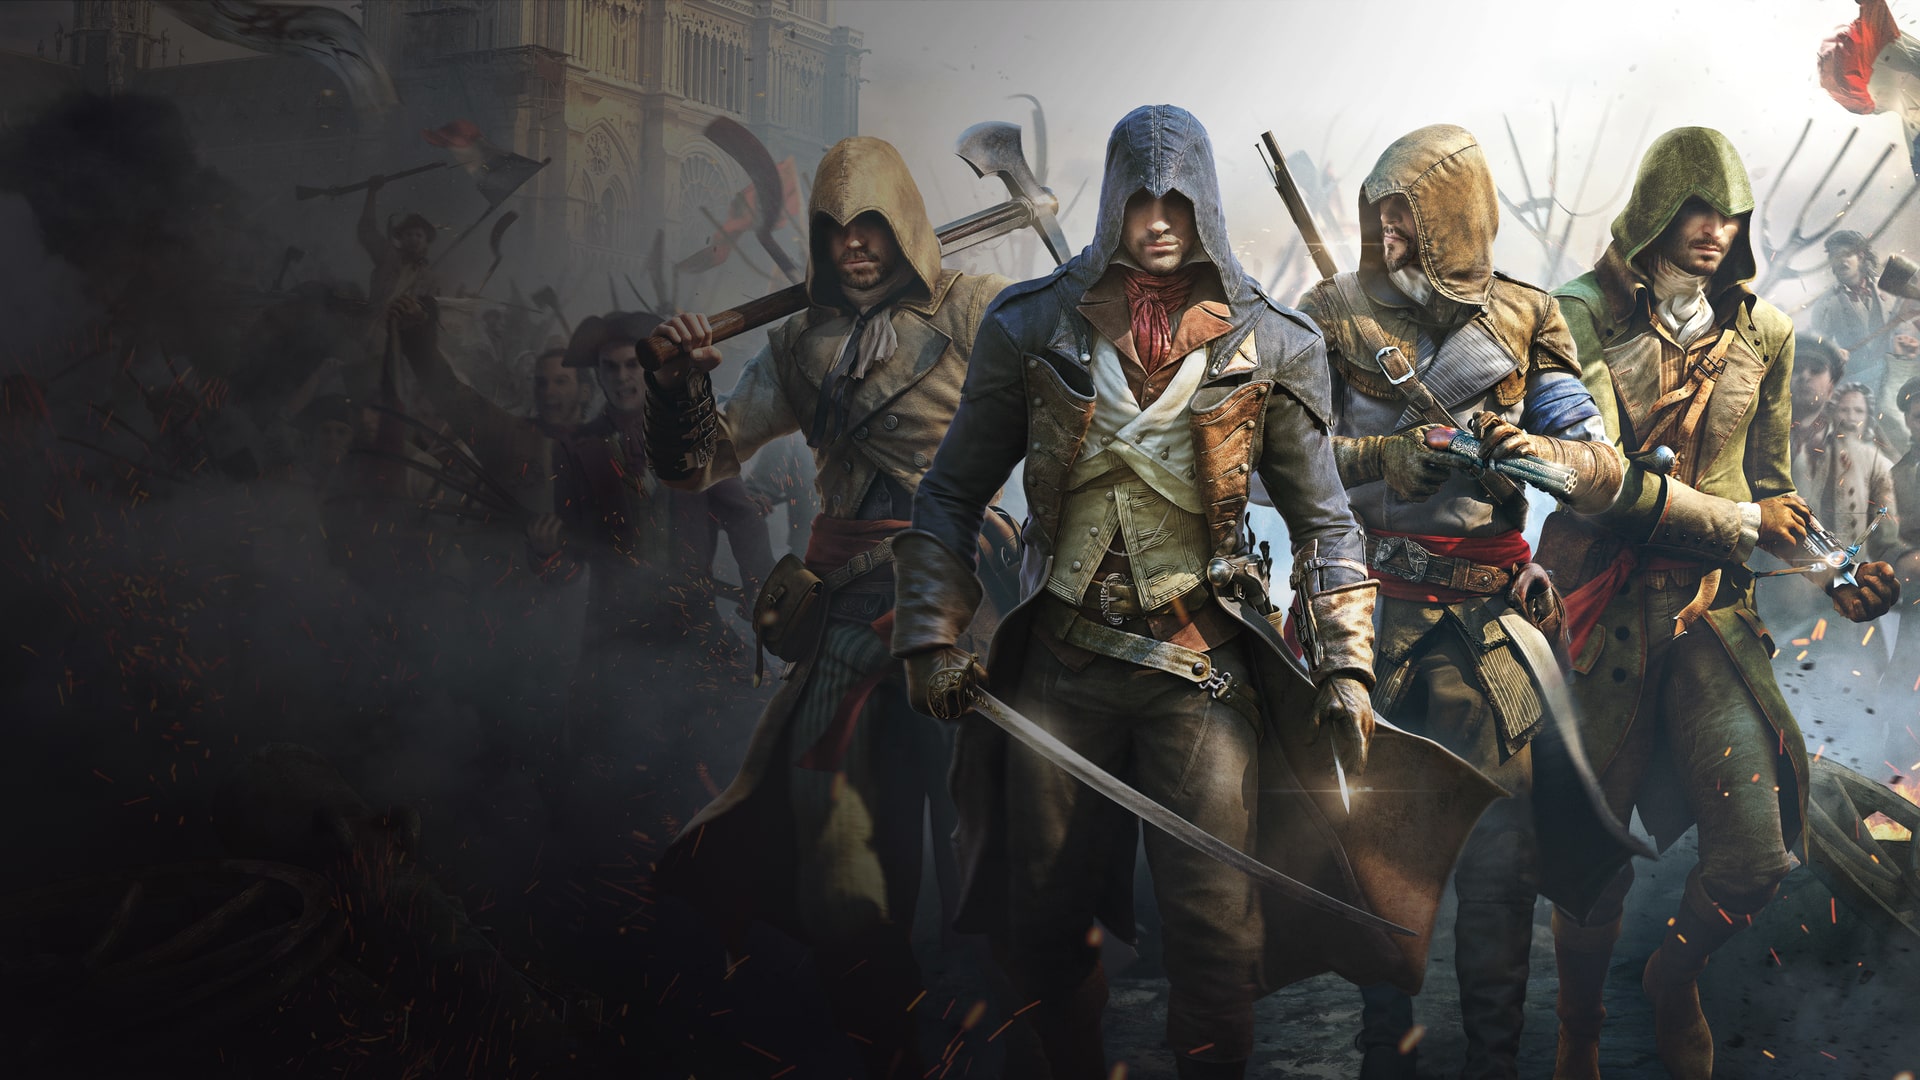 Ubisoft Assassin's Creed: Unity, PlayStation 4 vídeo - Juego